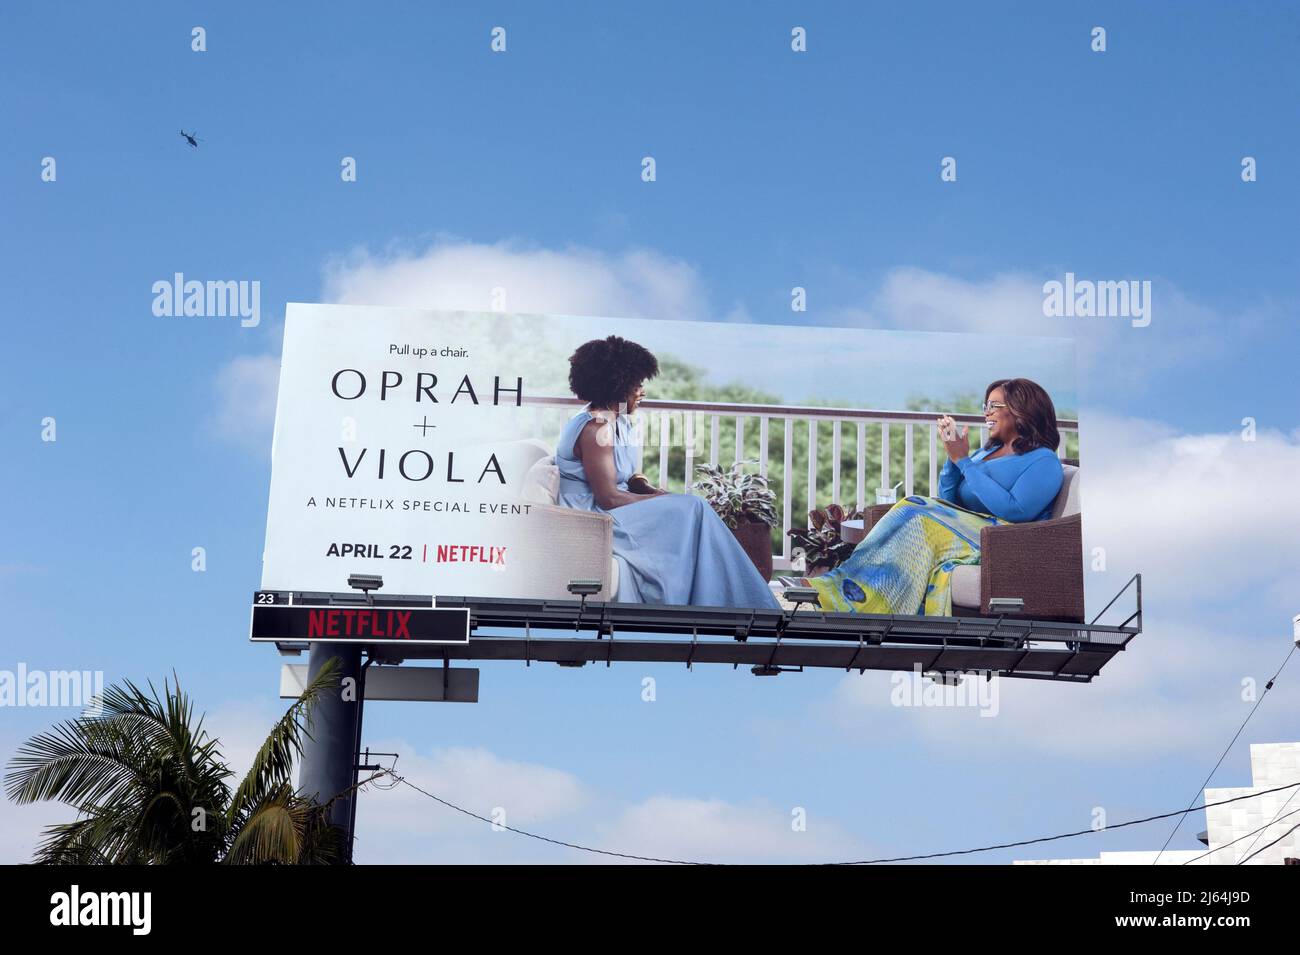 Netflix billboard on the Sunset Strip in Los Angeles promoting an Oprah Winfrey interview with Viola Davis. Stock Photo